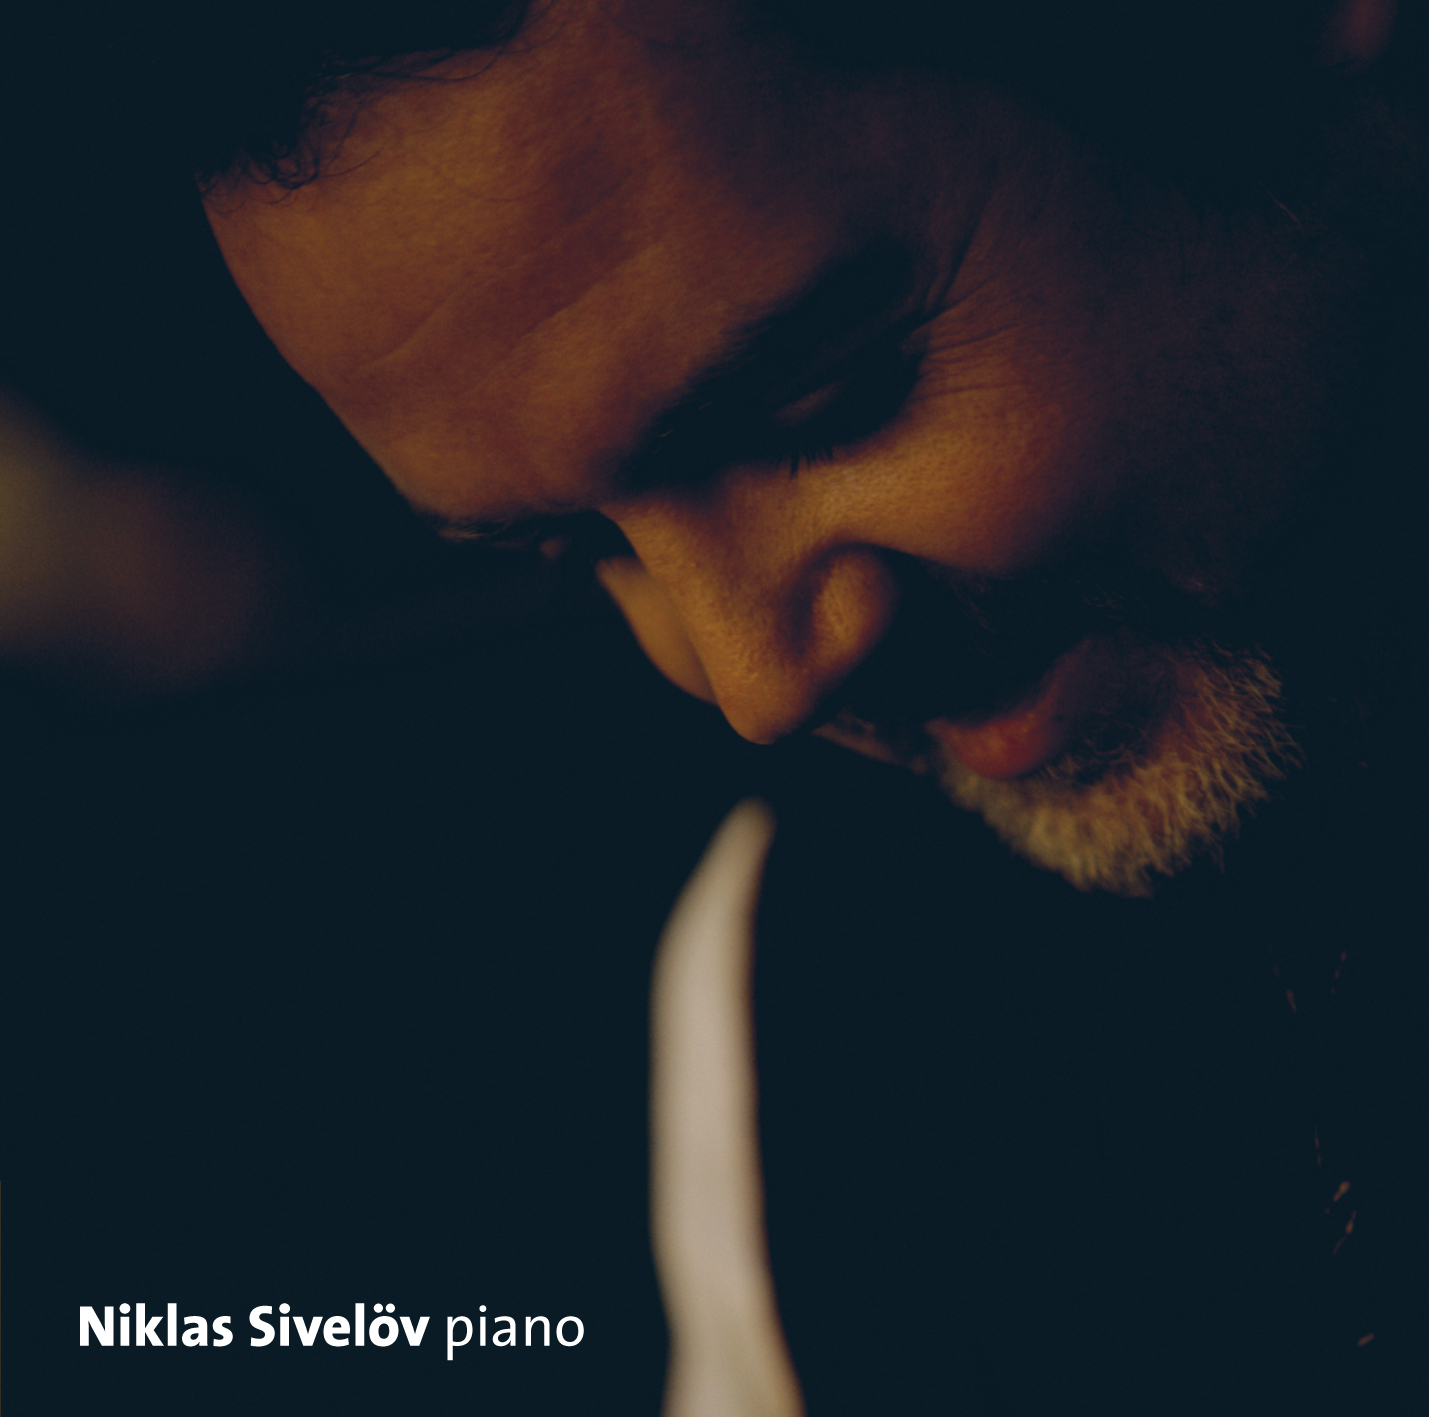 Niklas Sivelöv: Improvisational one